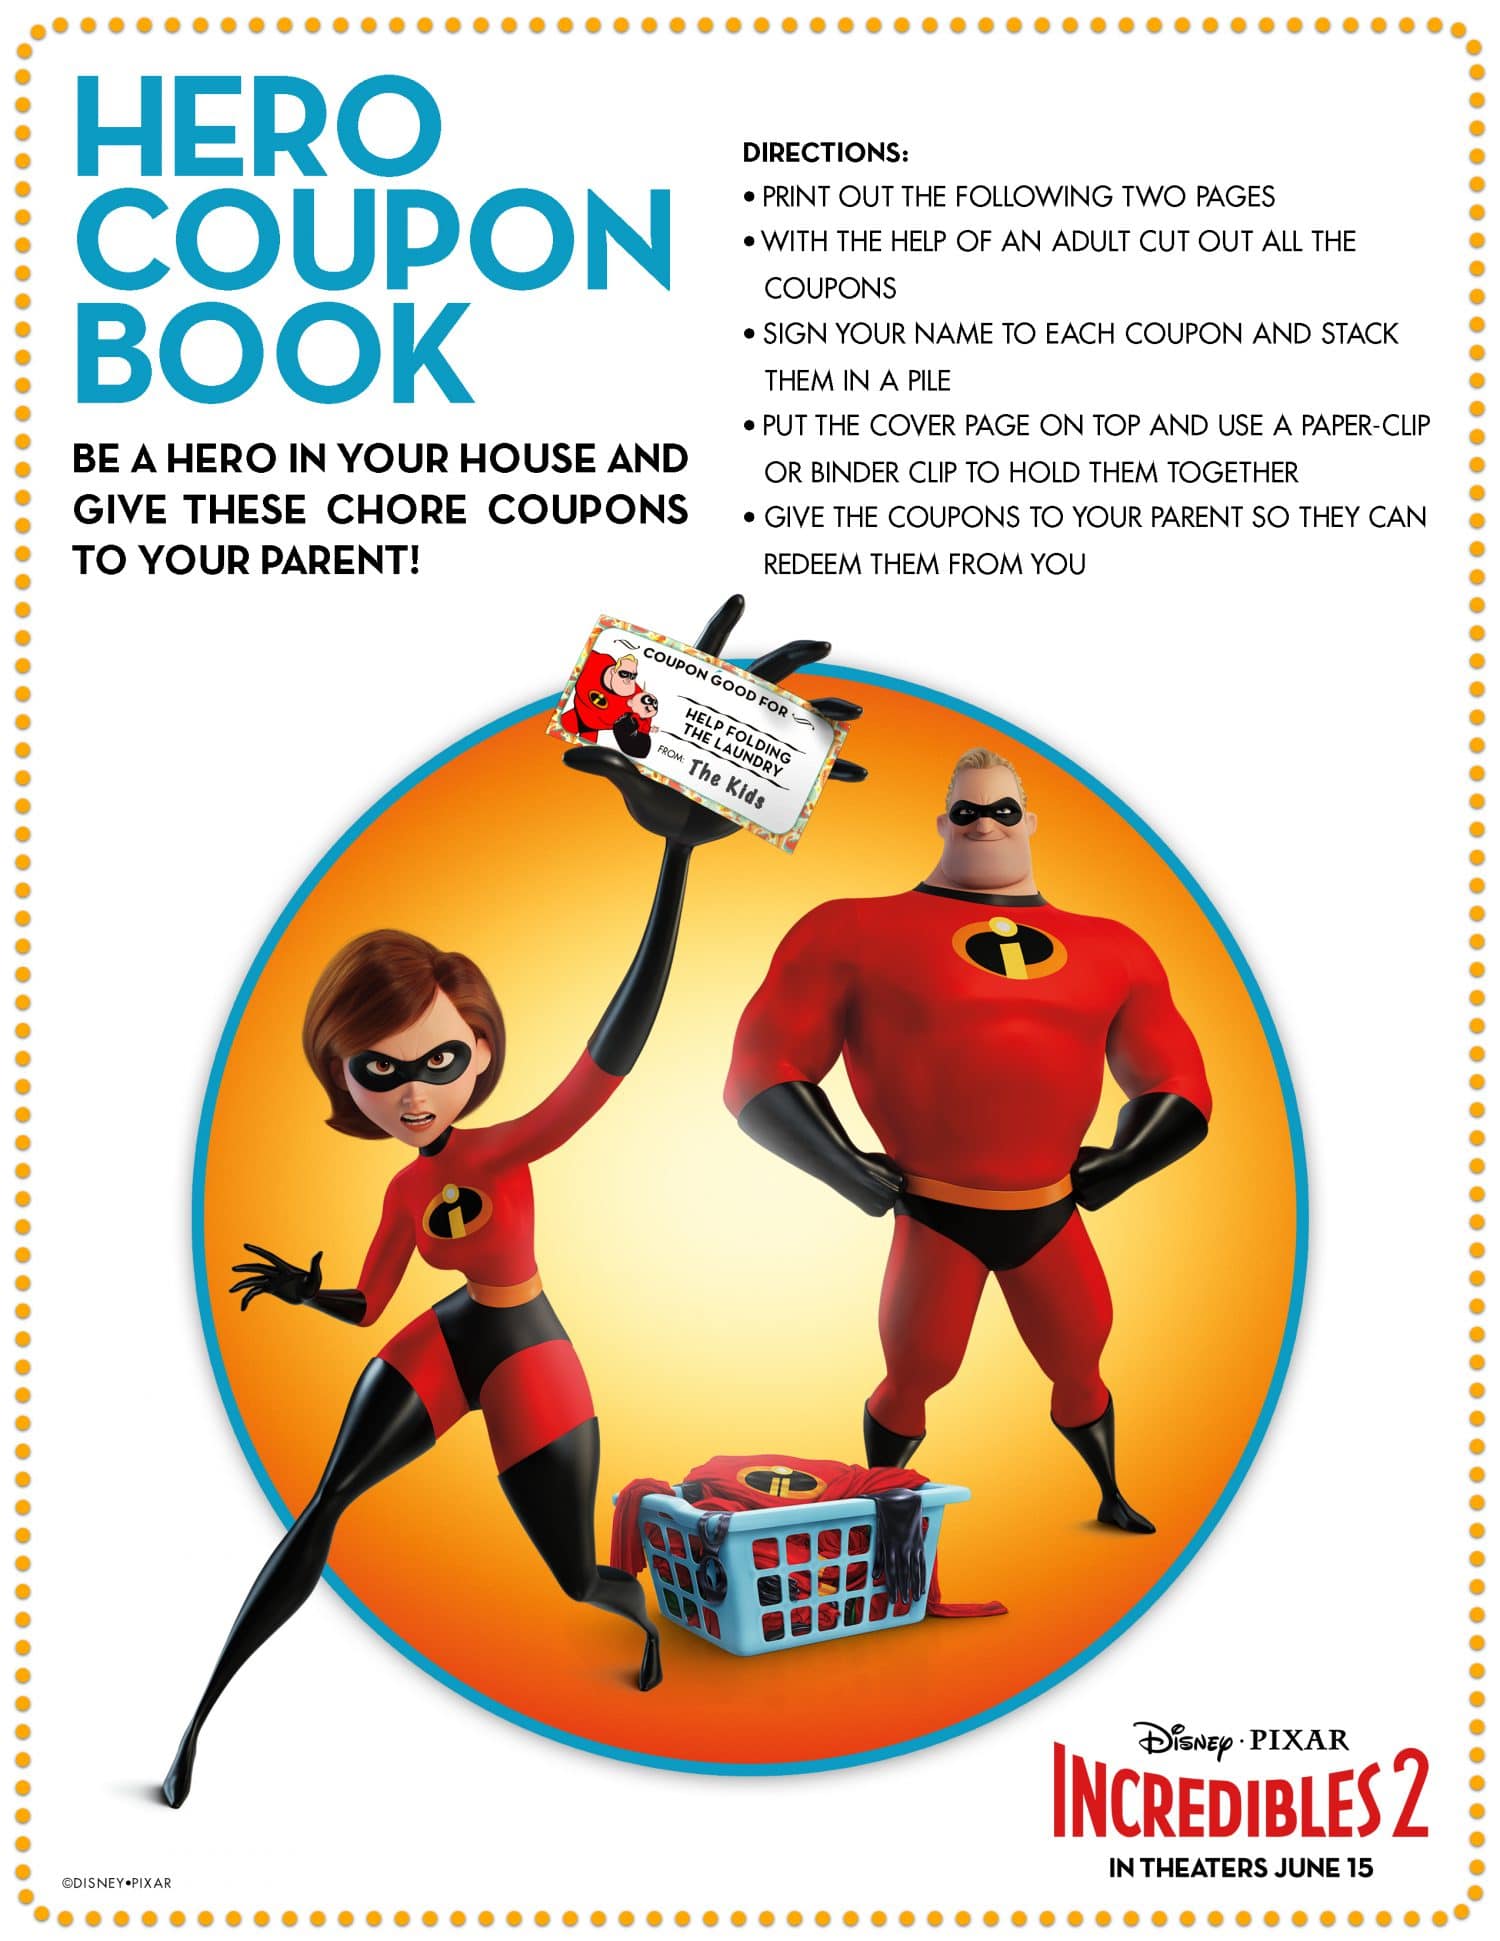 Hero Coupon Book Incredibles 2 Activity Sheet